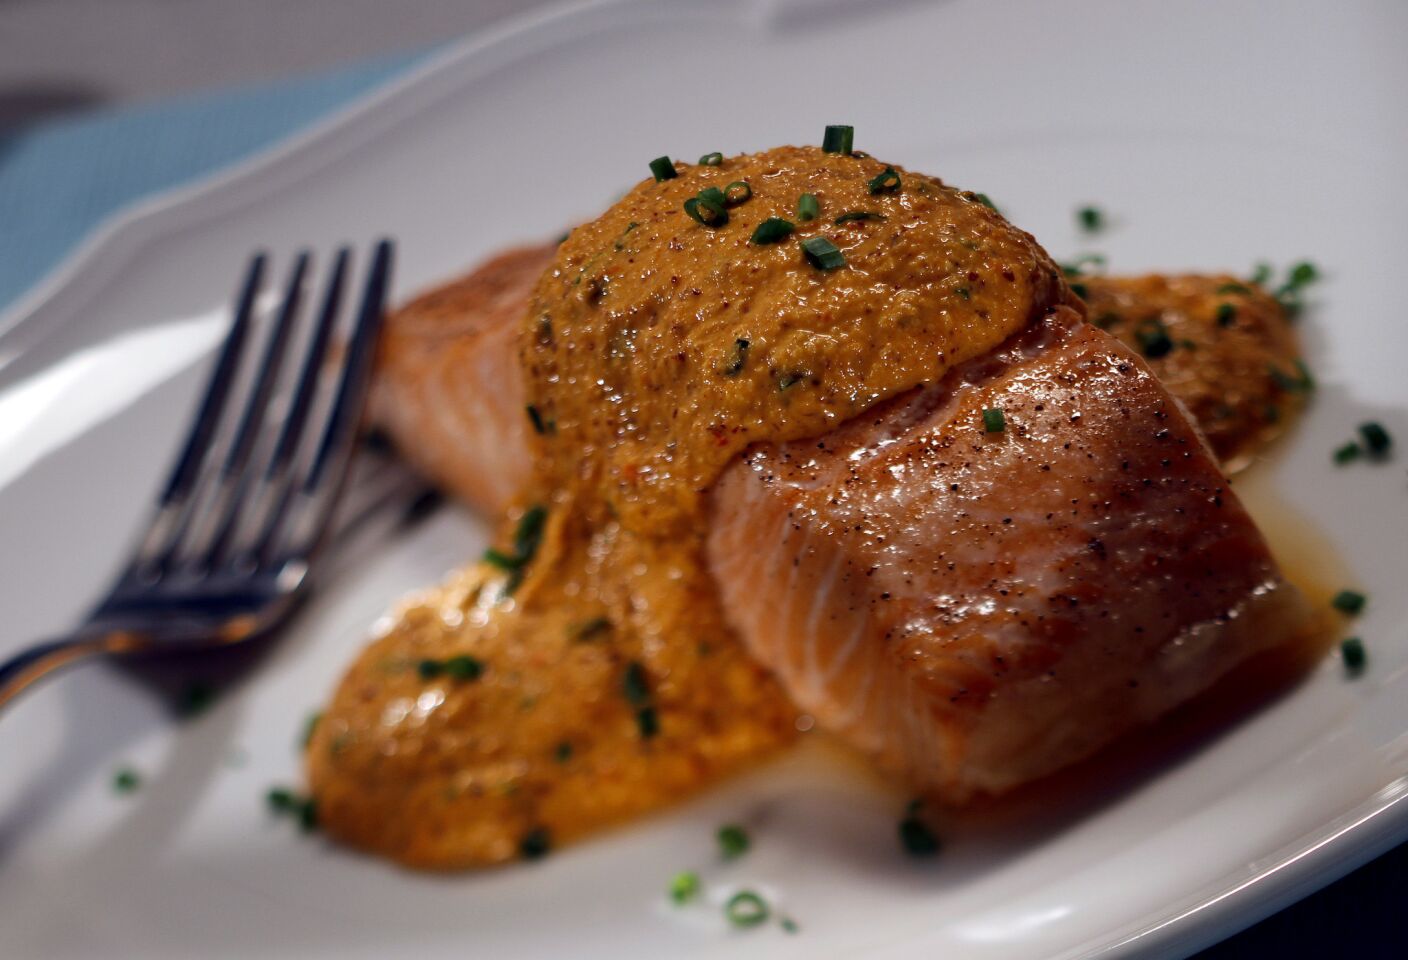 Roasted salmon with red pepper hazelnut pesto. Recipe here.